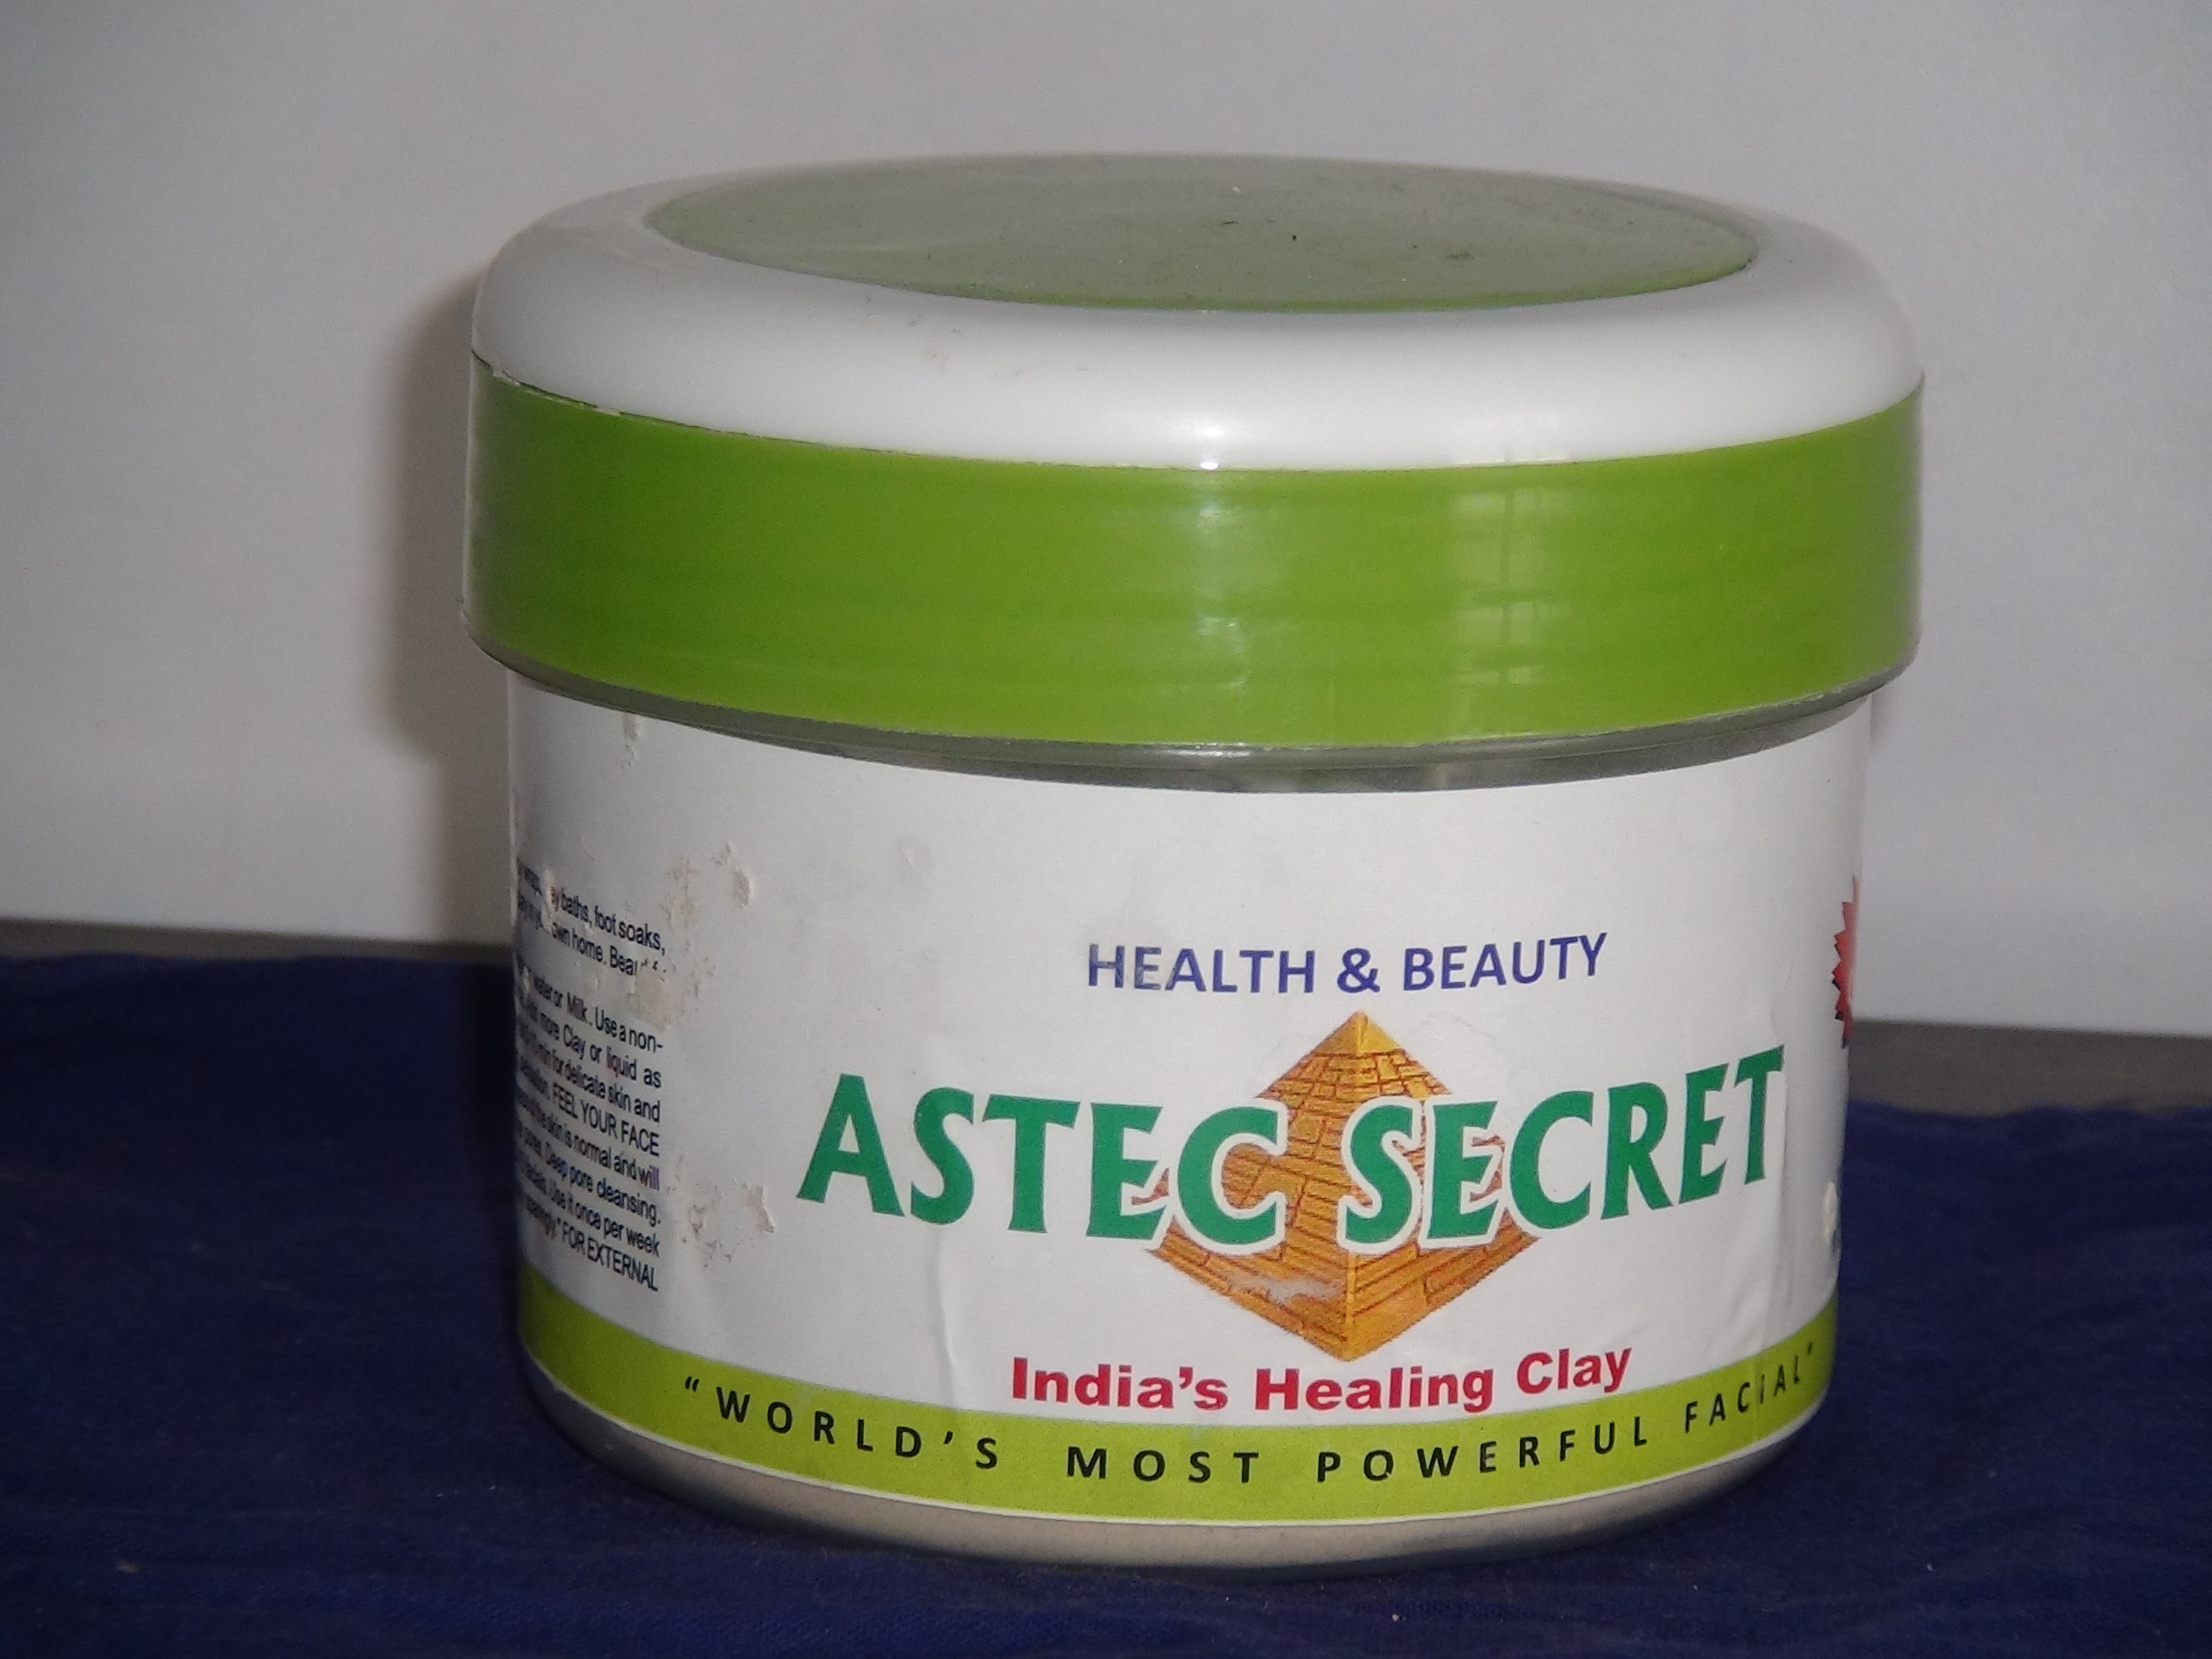 ASTEC SECRET HEALTH & BEAUTY WORLDS MOST POWERFULL FACIAL